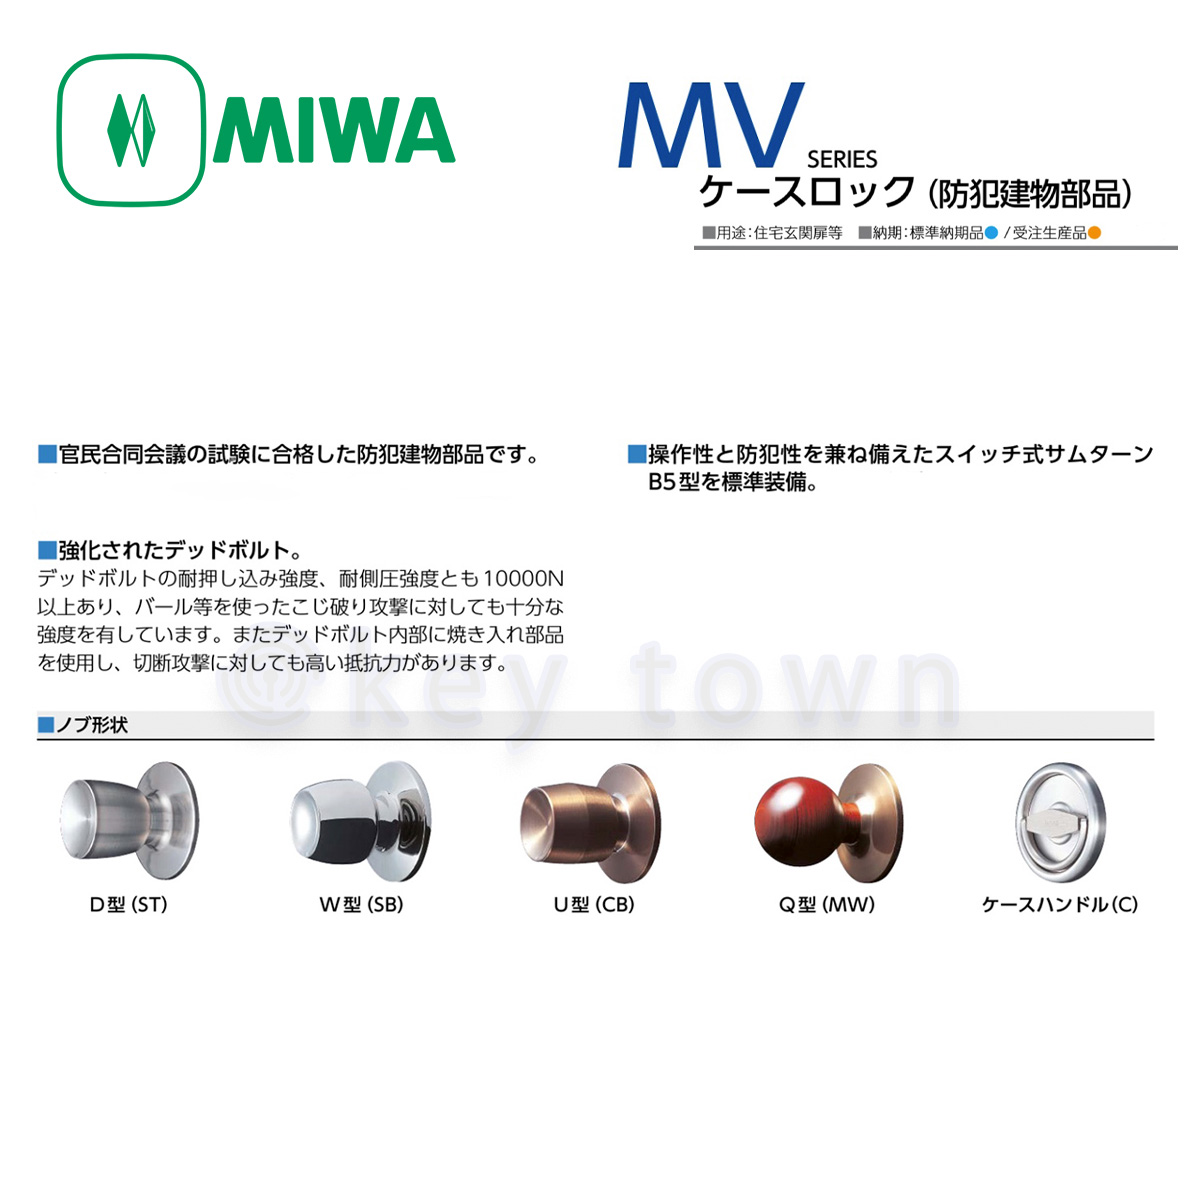 MIWA 【美和ロック】 レバーハンドル [MIWA-LOP] LP2040-8型｜鍵・シリンダーの格安ネット通販【鍵TOWN】